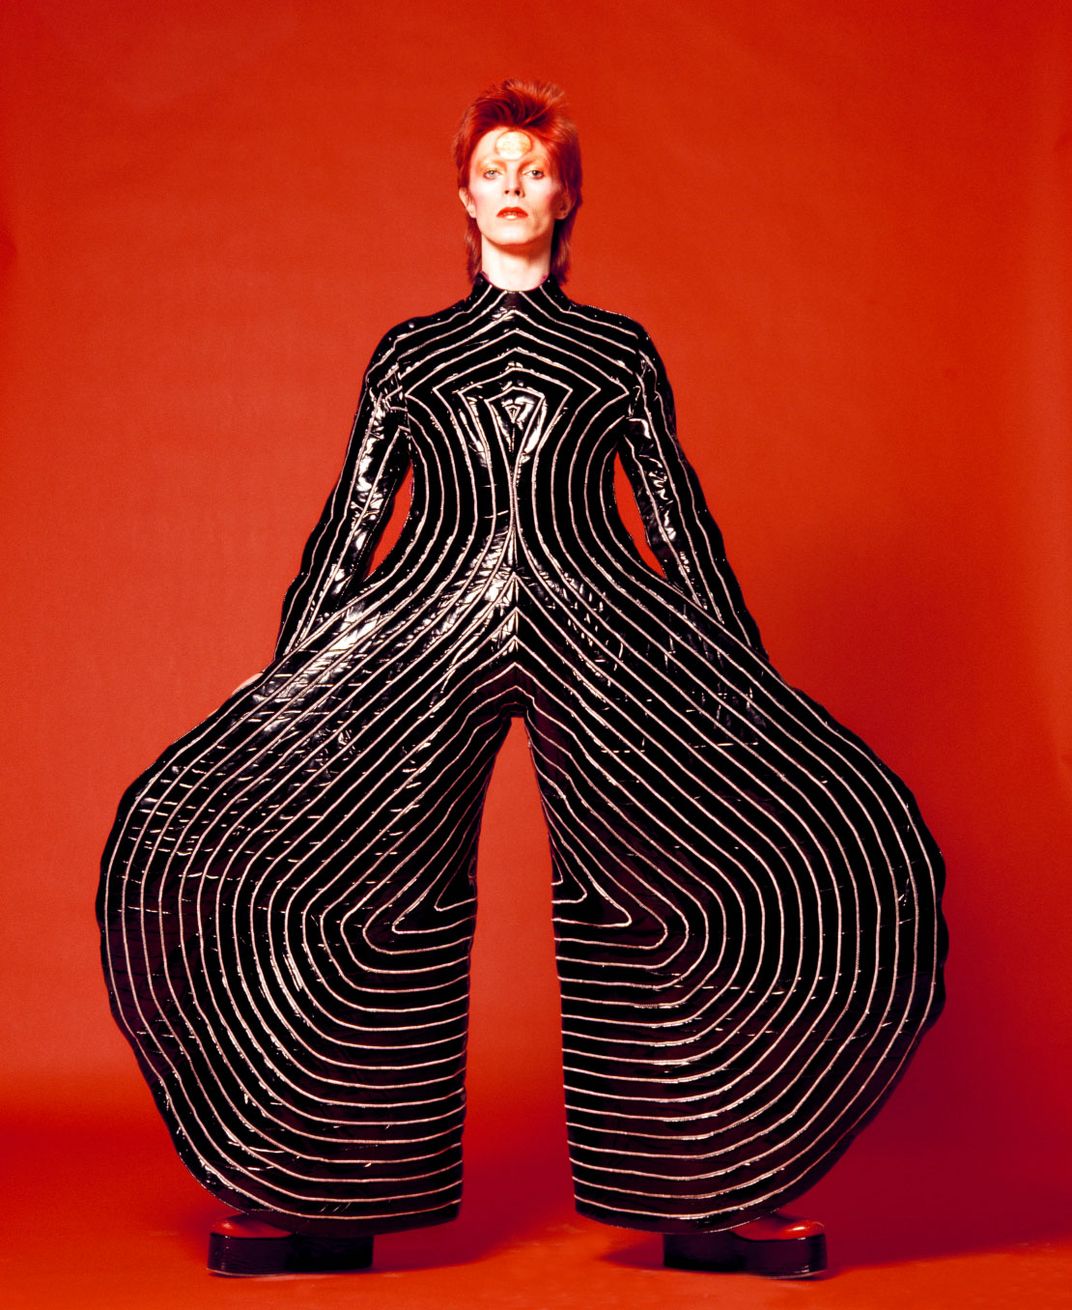 Bowie wearing a striped bodysuit designed by Kansai Yamamoto